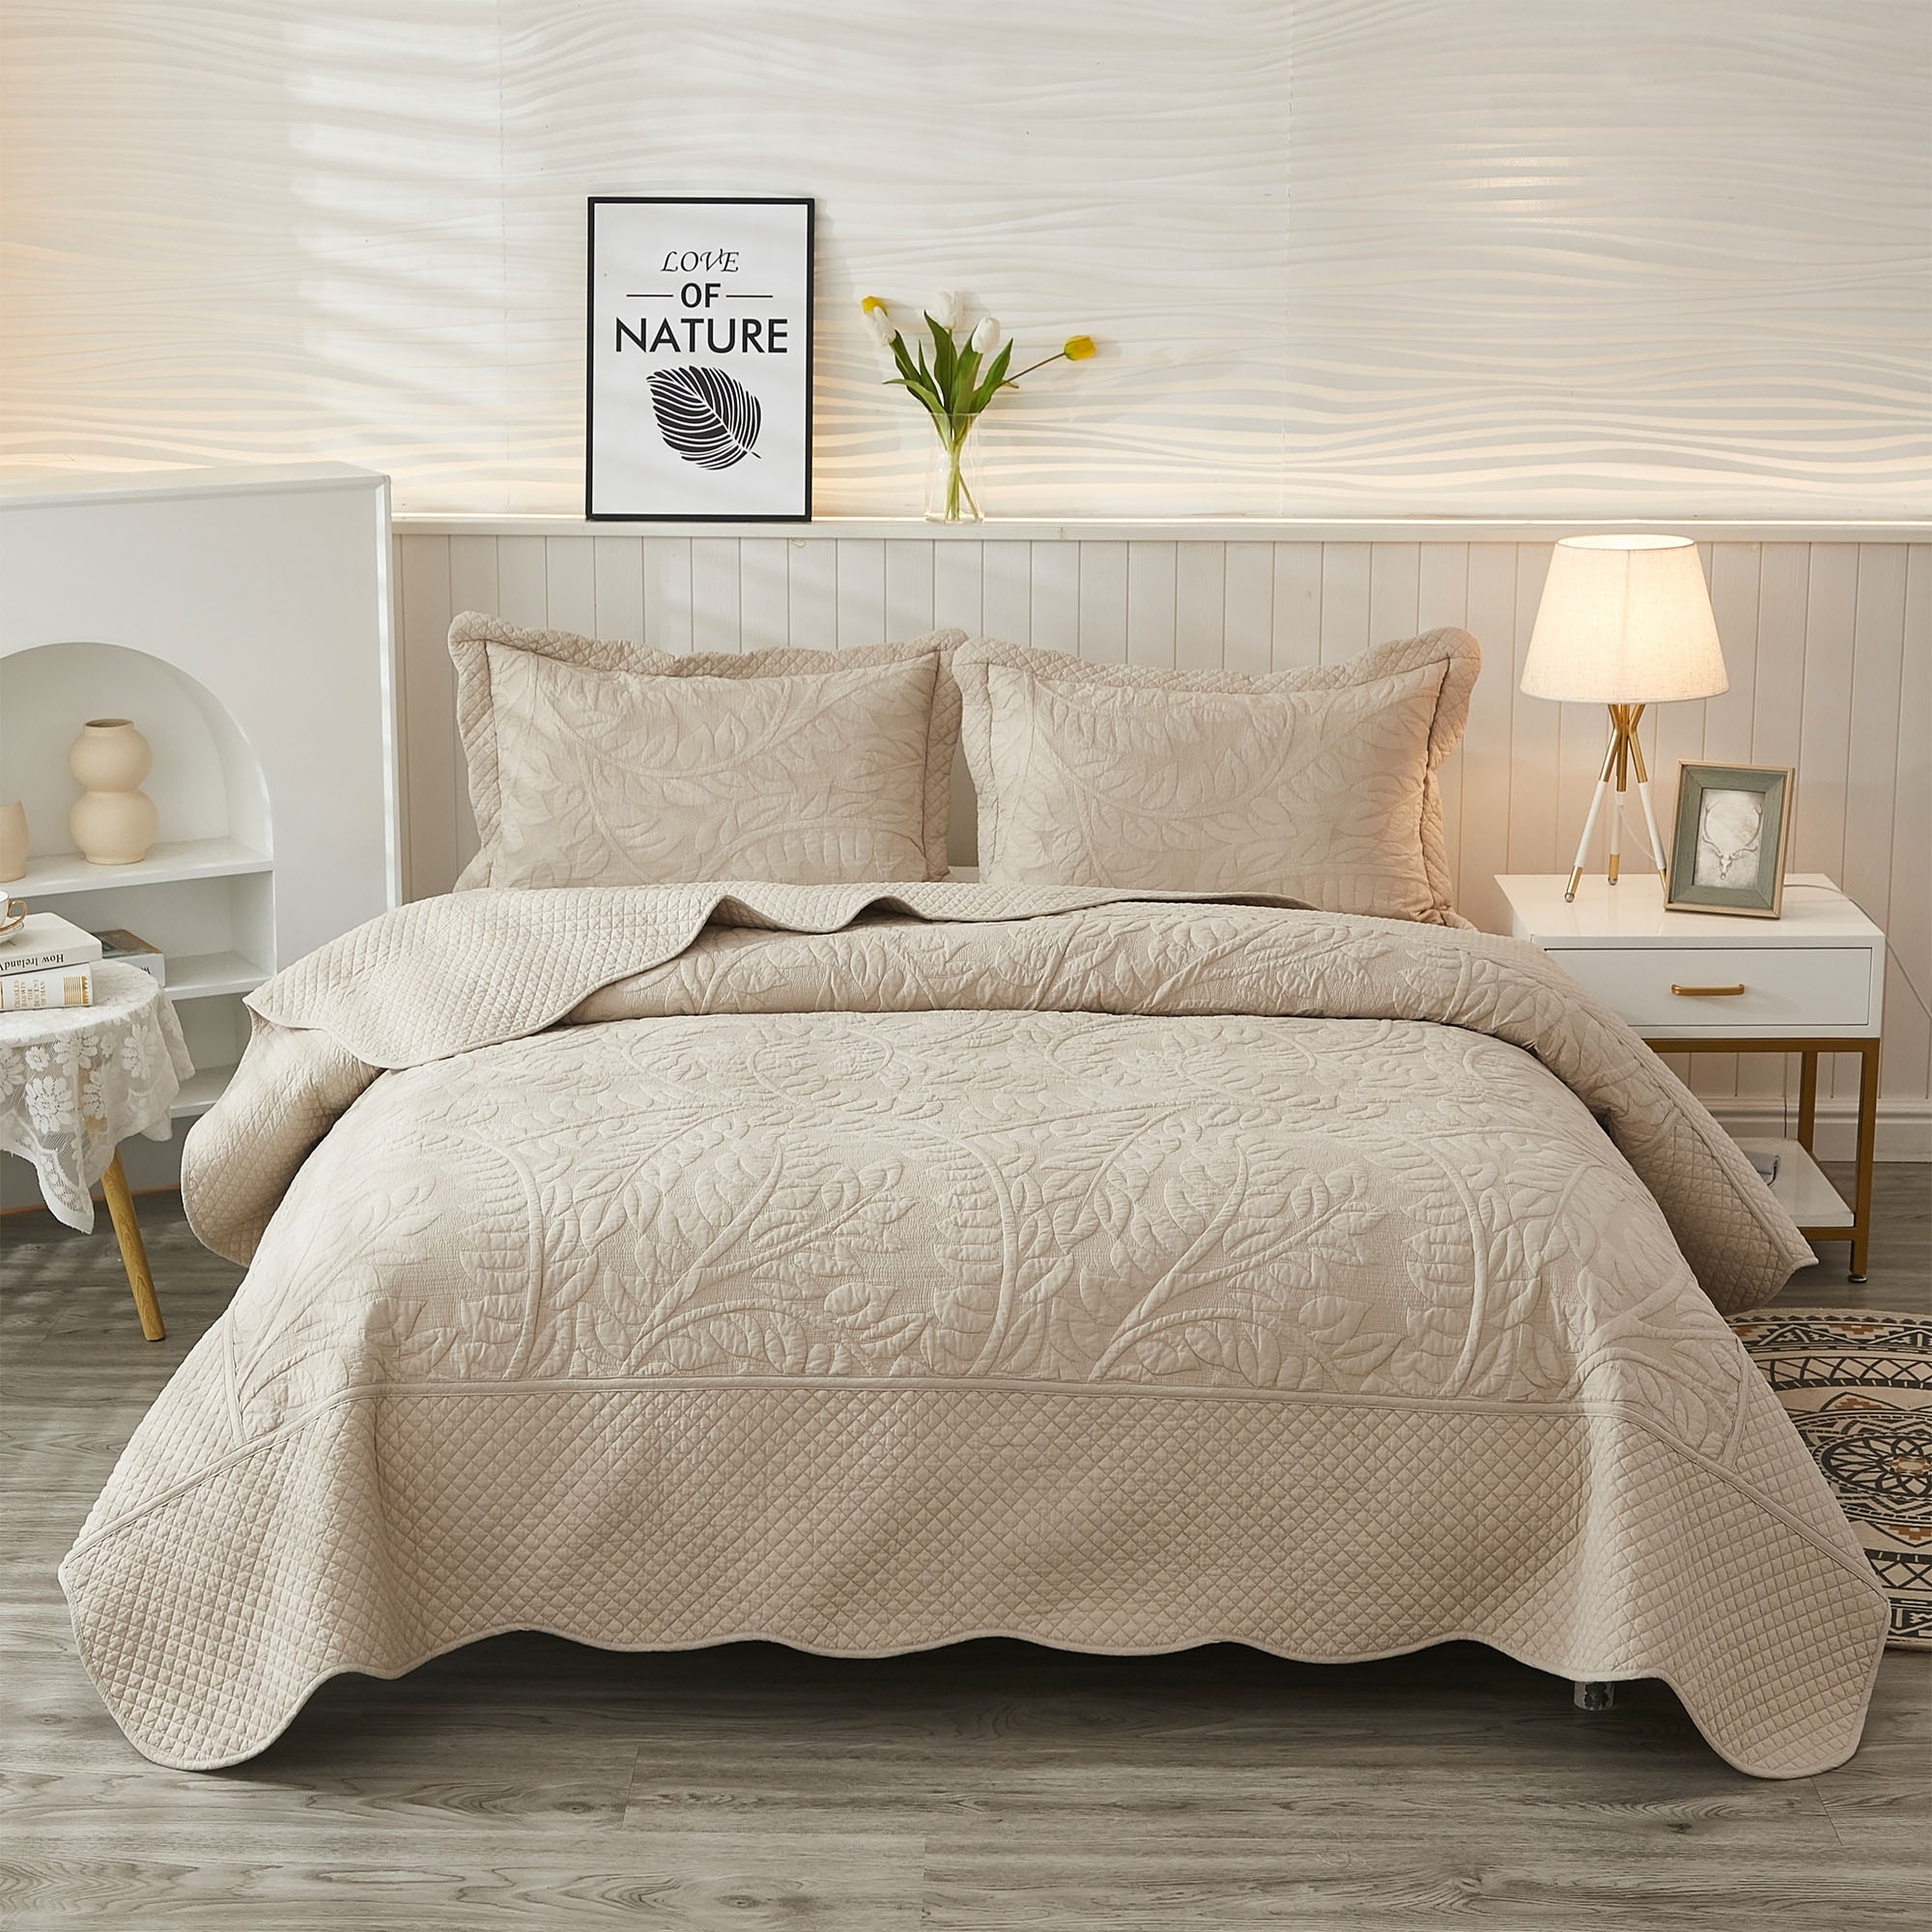 https://ak1.ostkcdn.com/images/products/is/images/direct/da983557bb56f20bddfa7629f7c2a8bb84a85f63/MarCielo-3-Piece-Cotton-Oversized-Bedspread-Quilt-Set-Tmonica.jpg